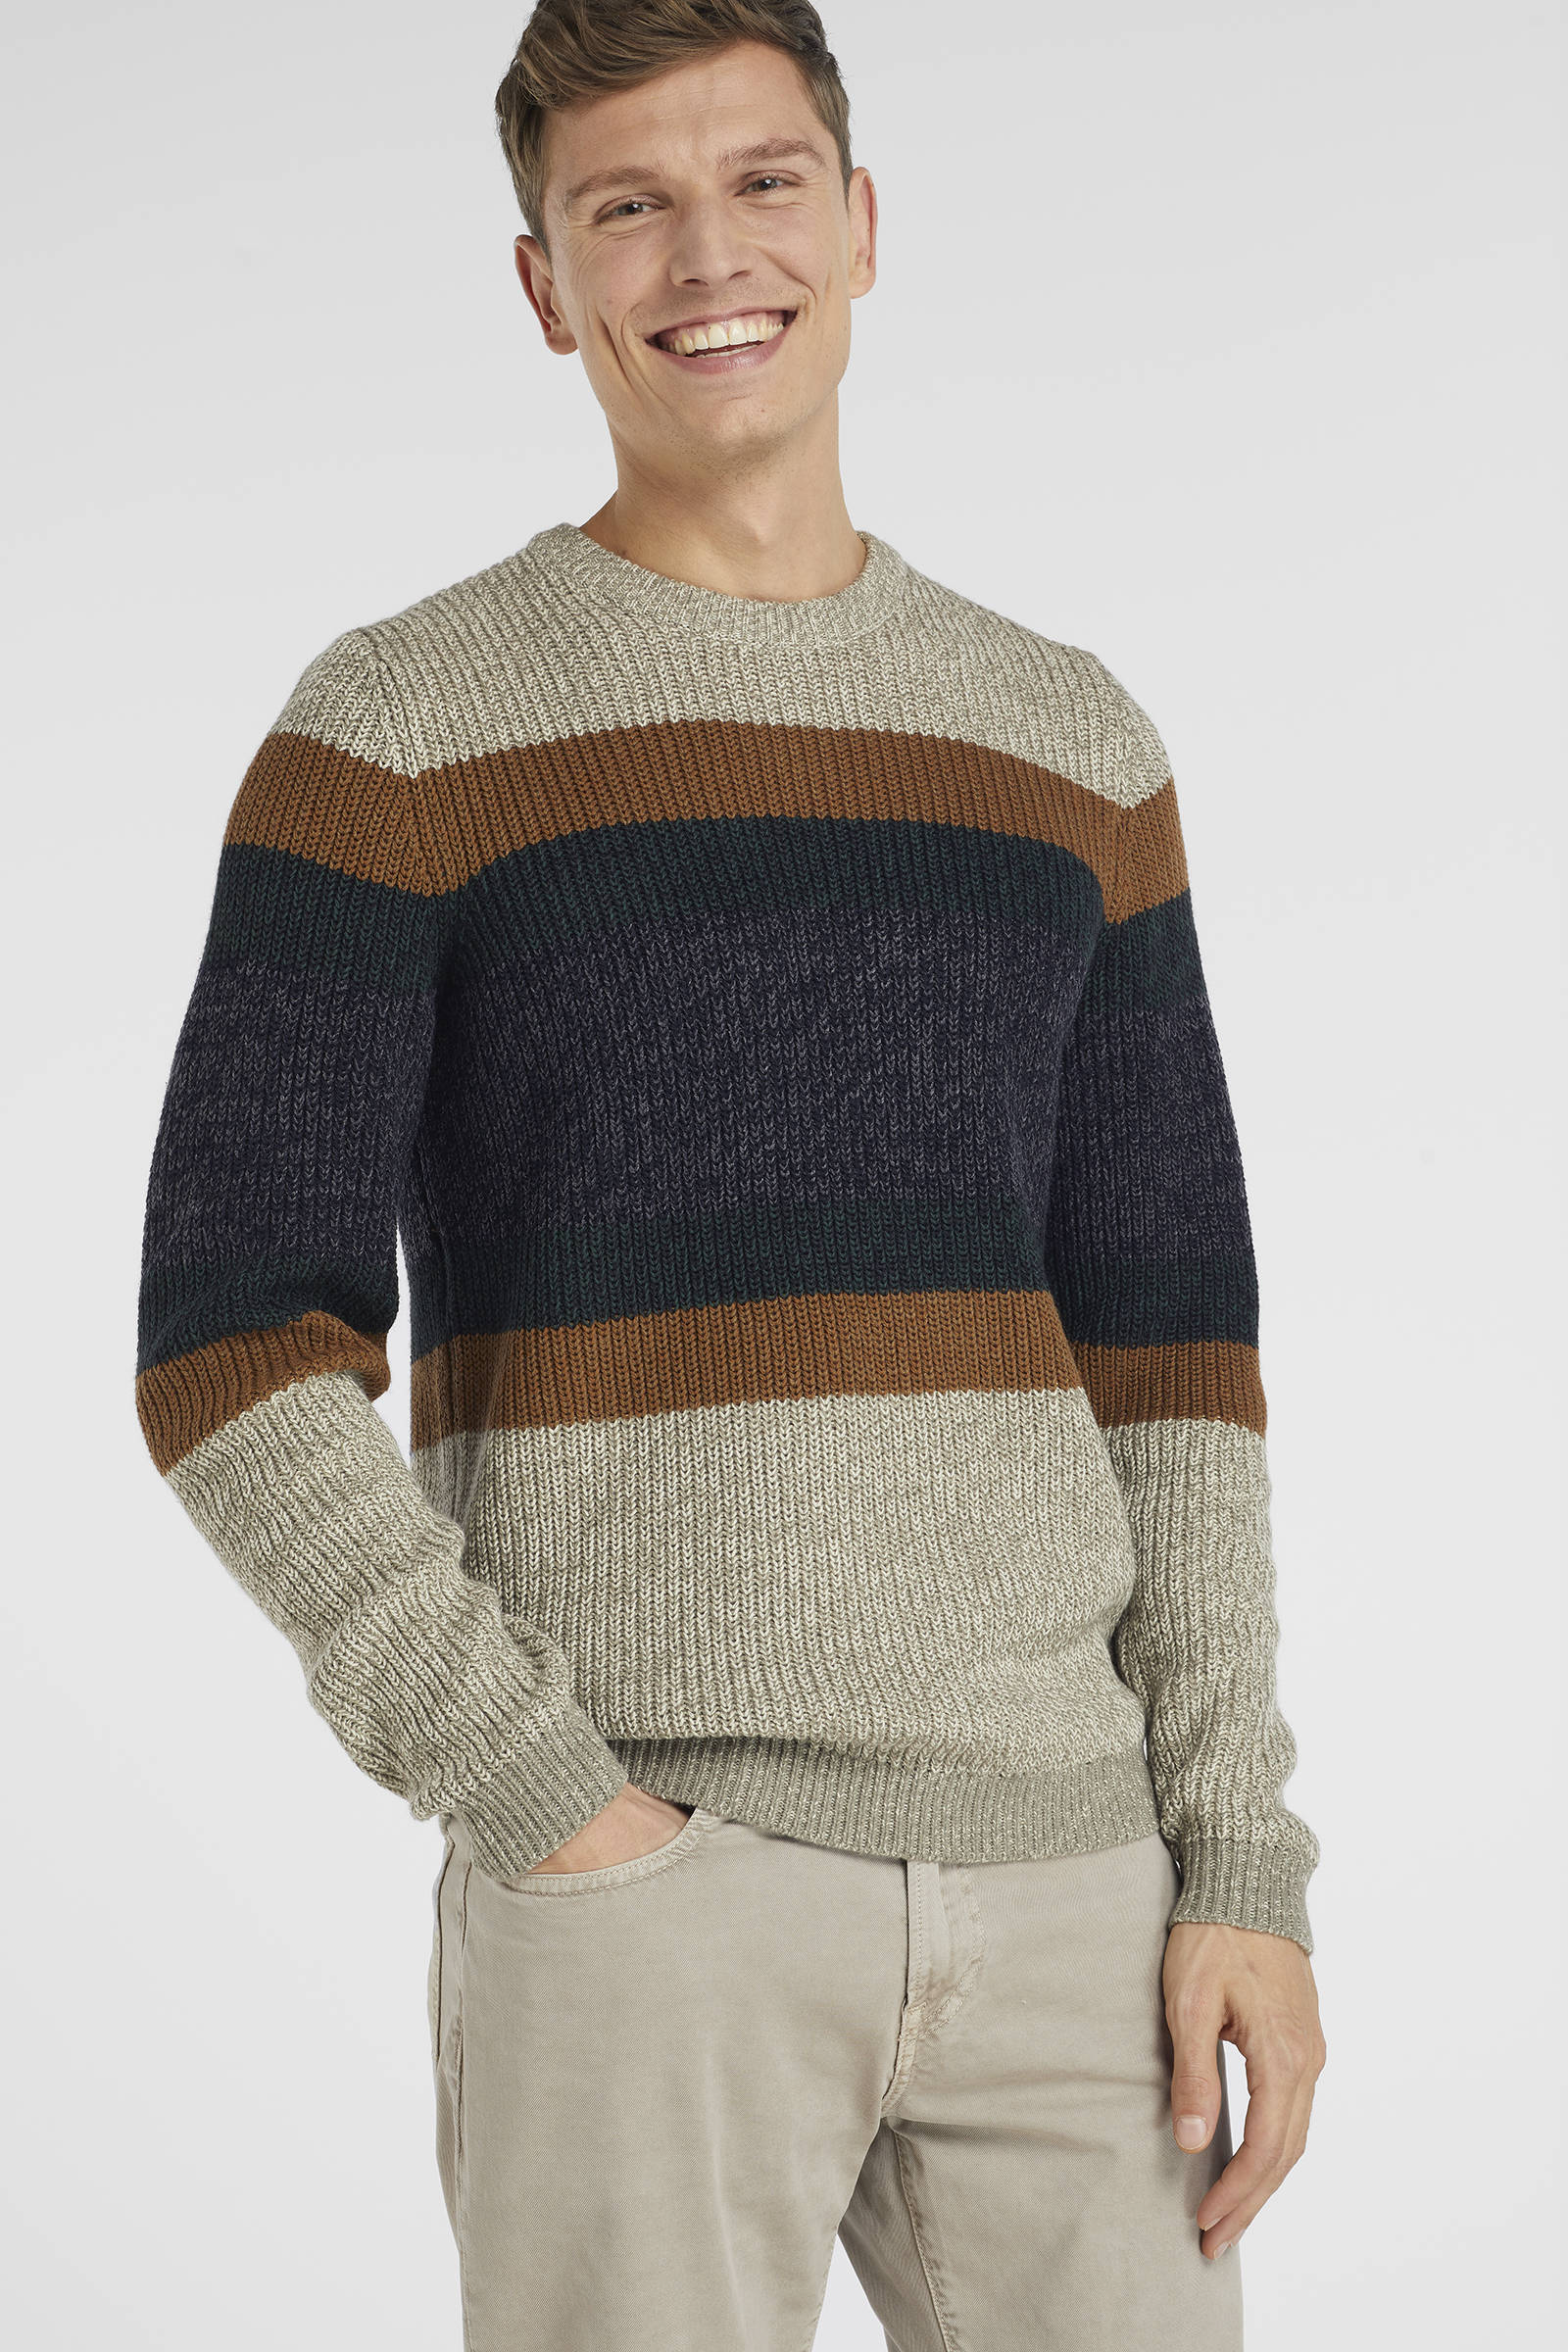 crewneck grijs shirt Mannen grijze trui Kleding Herenkleding Sweaters lichte knitwear met unieke stof 